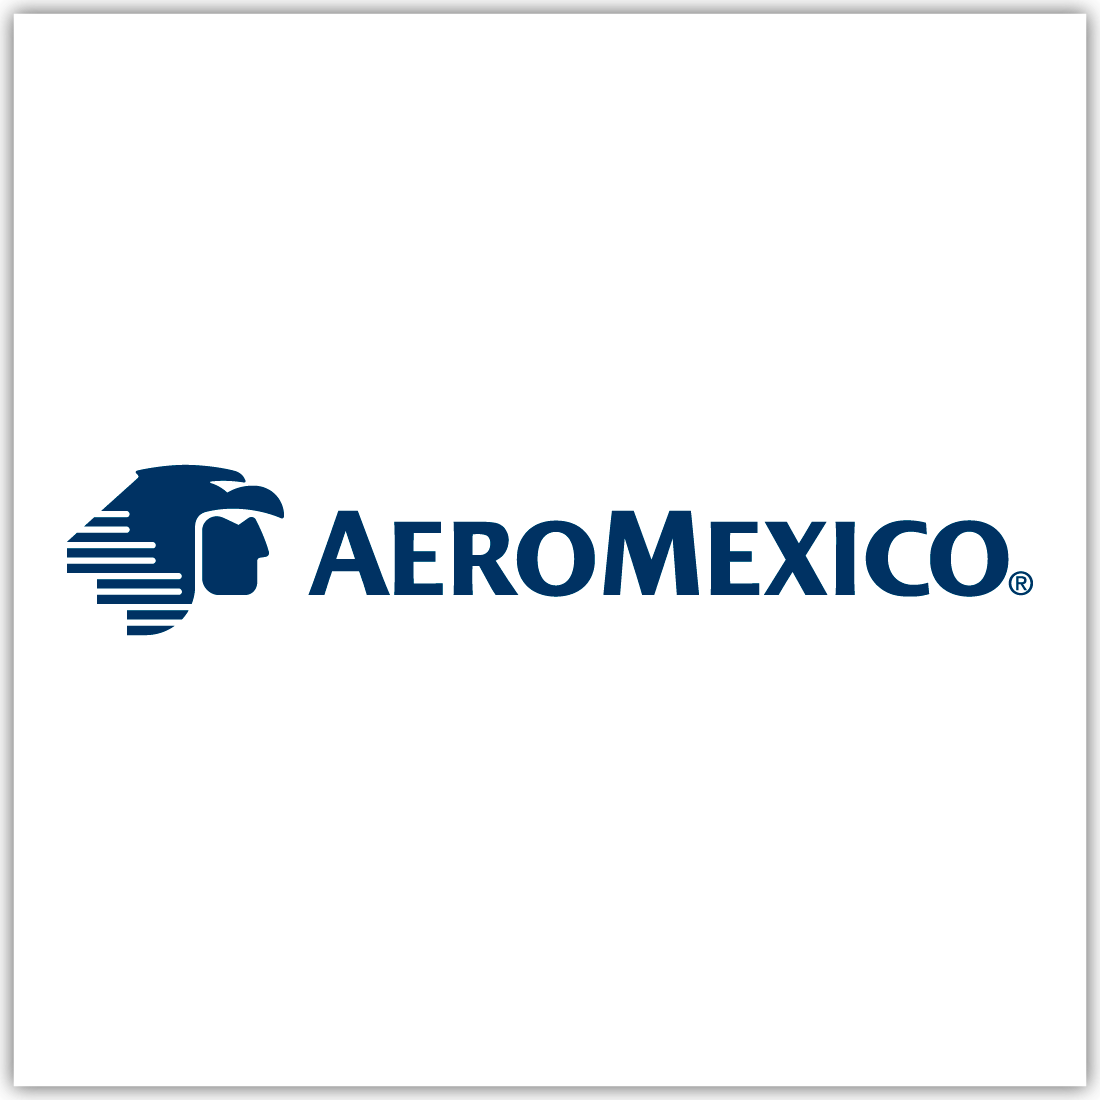 aeromexico.png